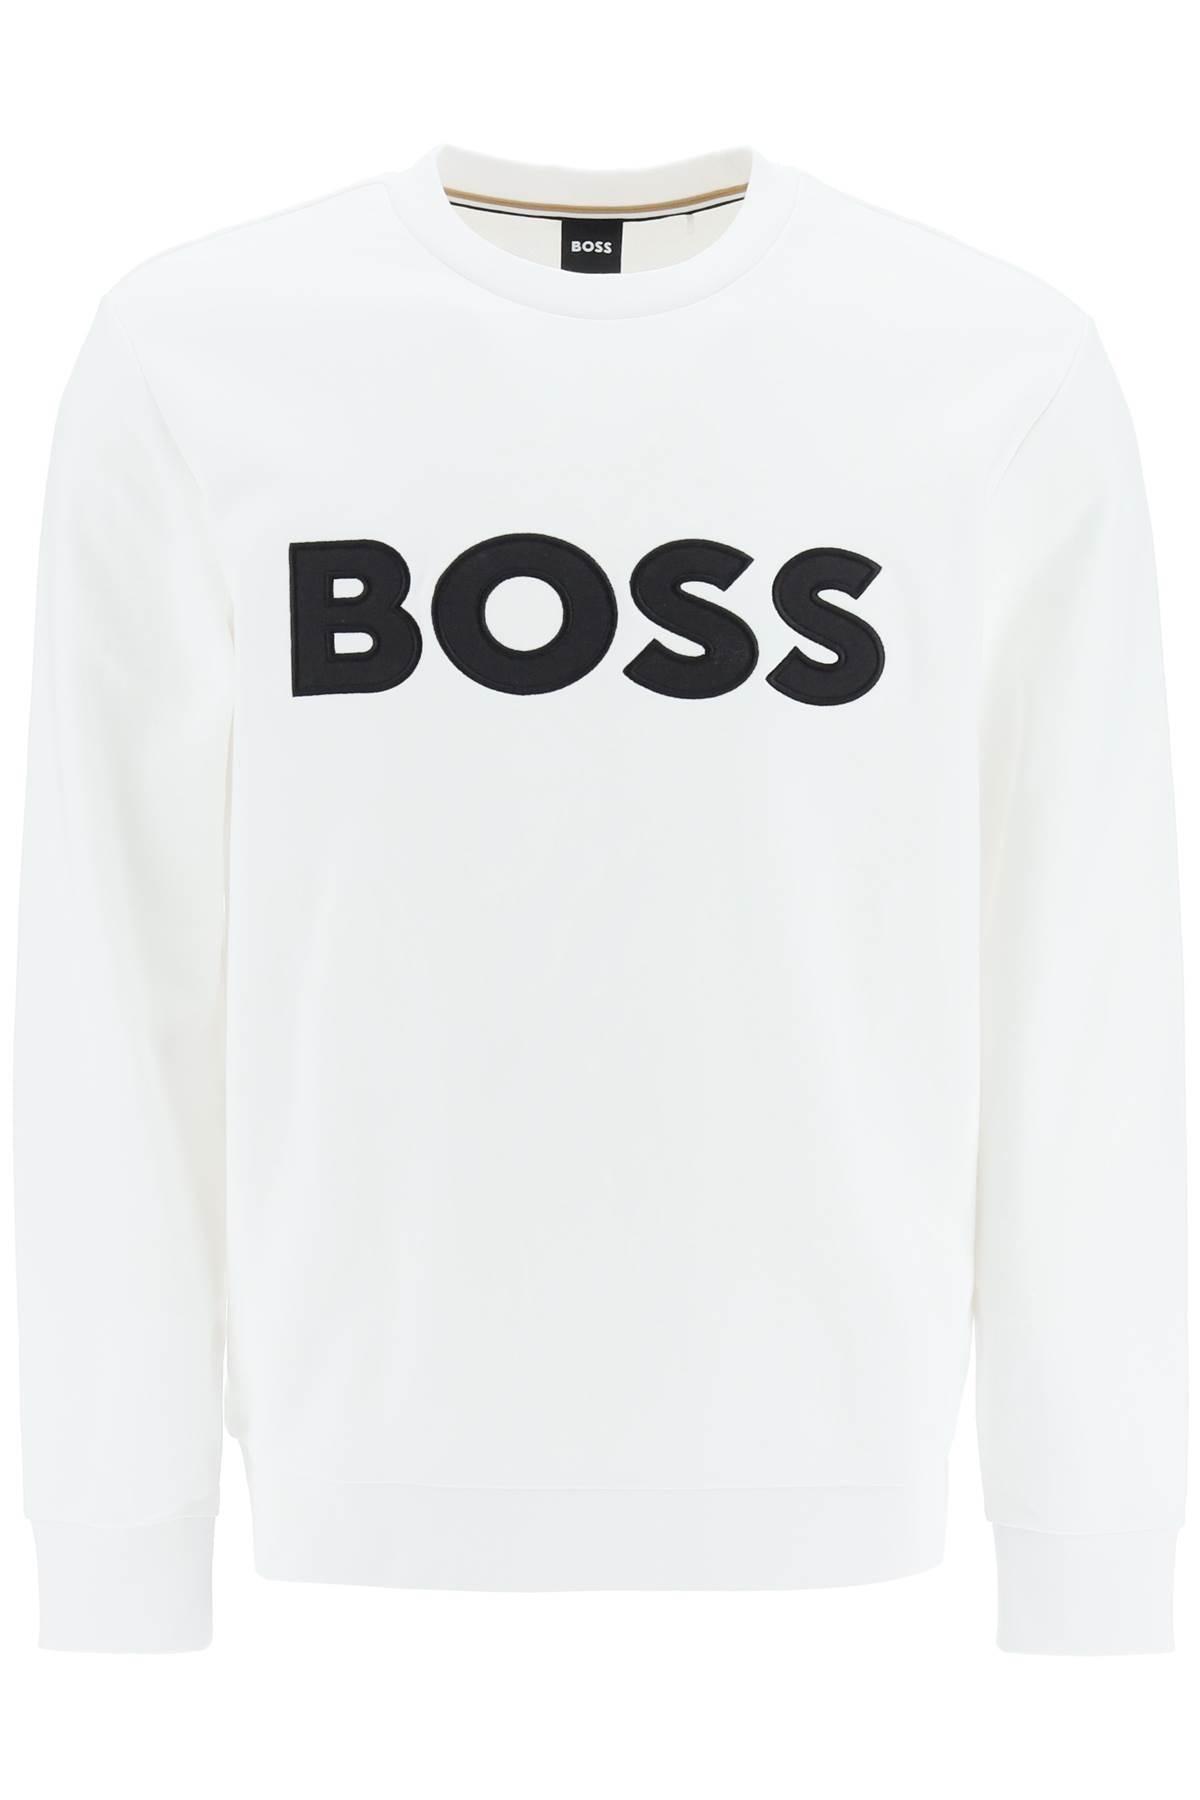 BOSS by HUGO BOSS Patch Logo Crew-neck Sweatshirt in White for Men | Lyst